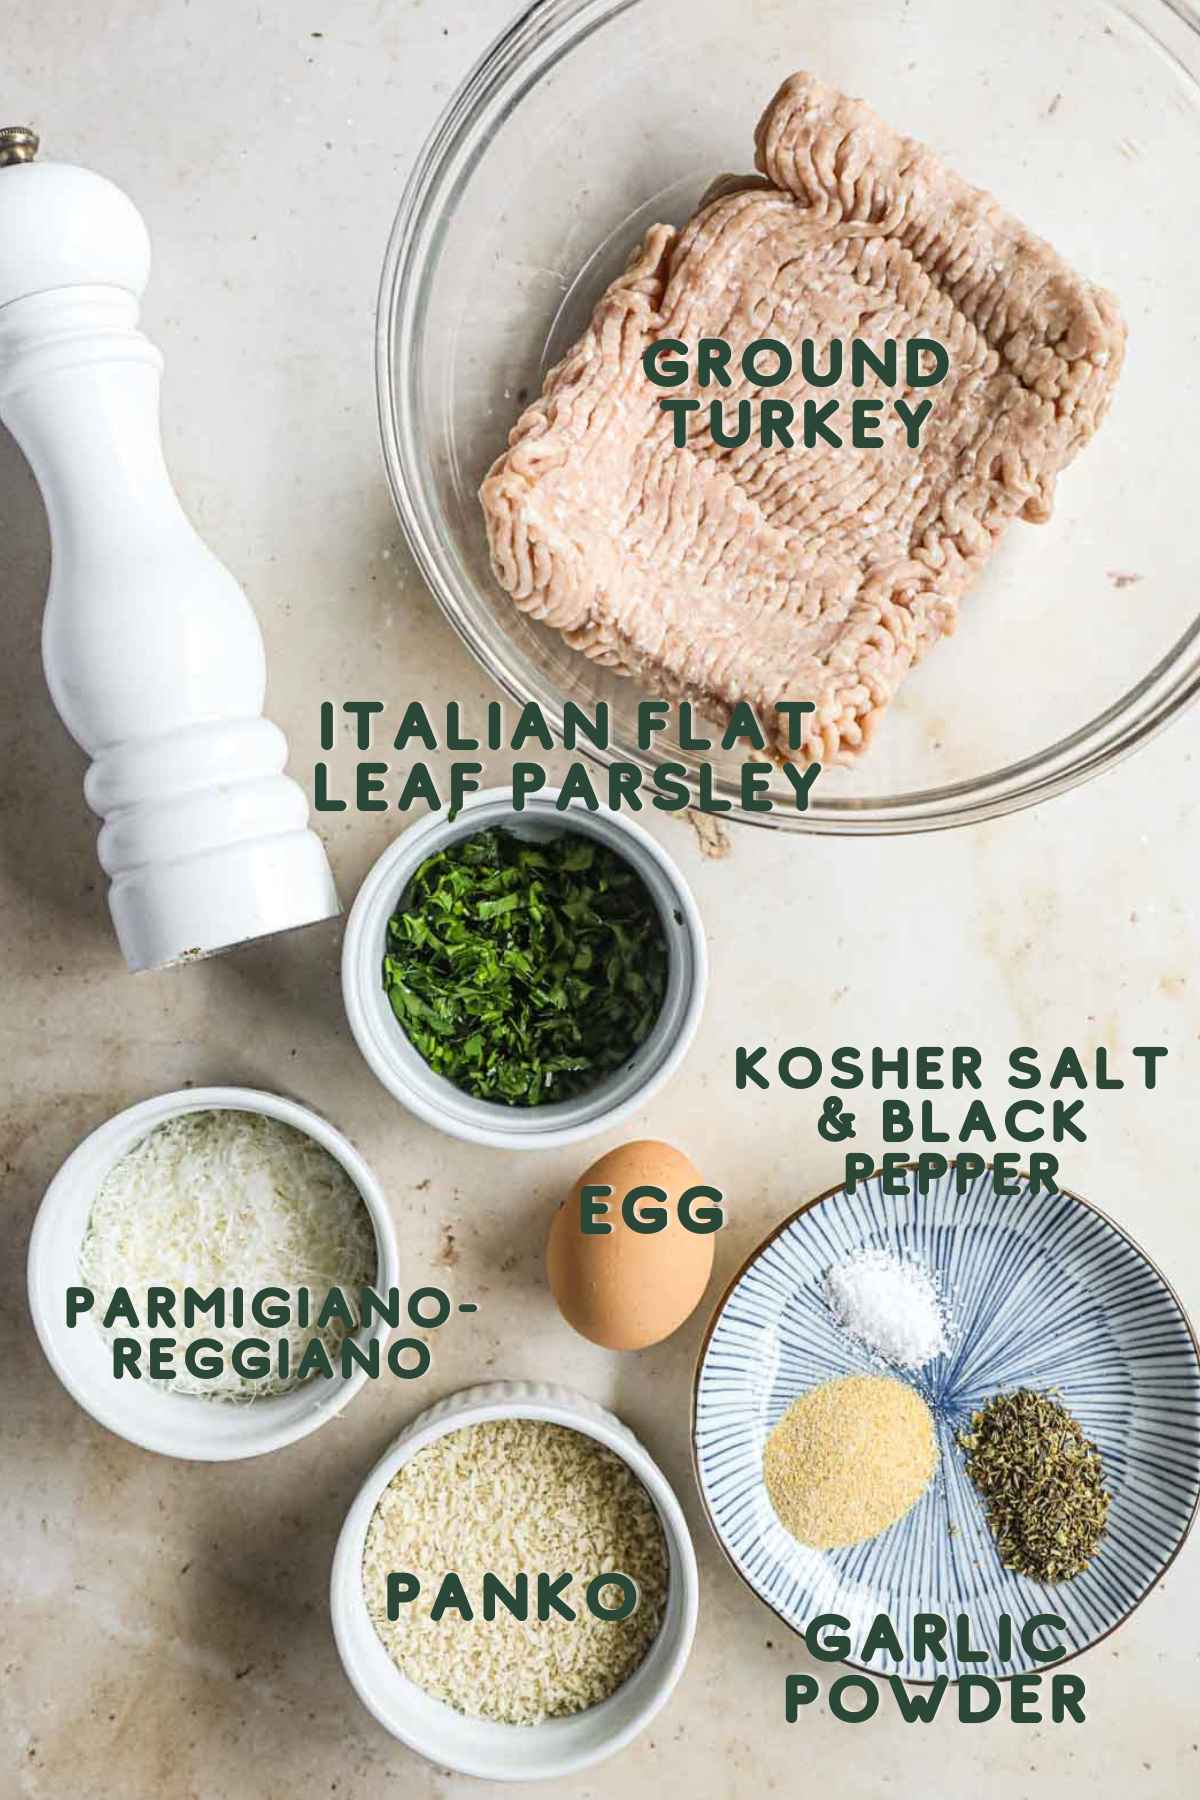 Ingredients to make ground turkey meatballs, ground turkey, italian flat leaf parsley, parmigiano-reggiano, egg, kosher salt, black pepper, panko, and garlic powder.